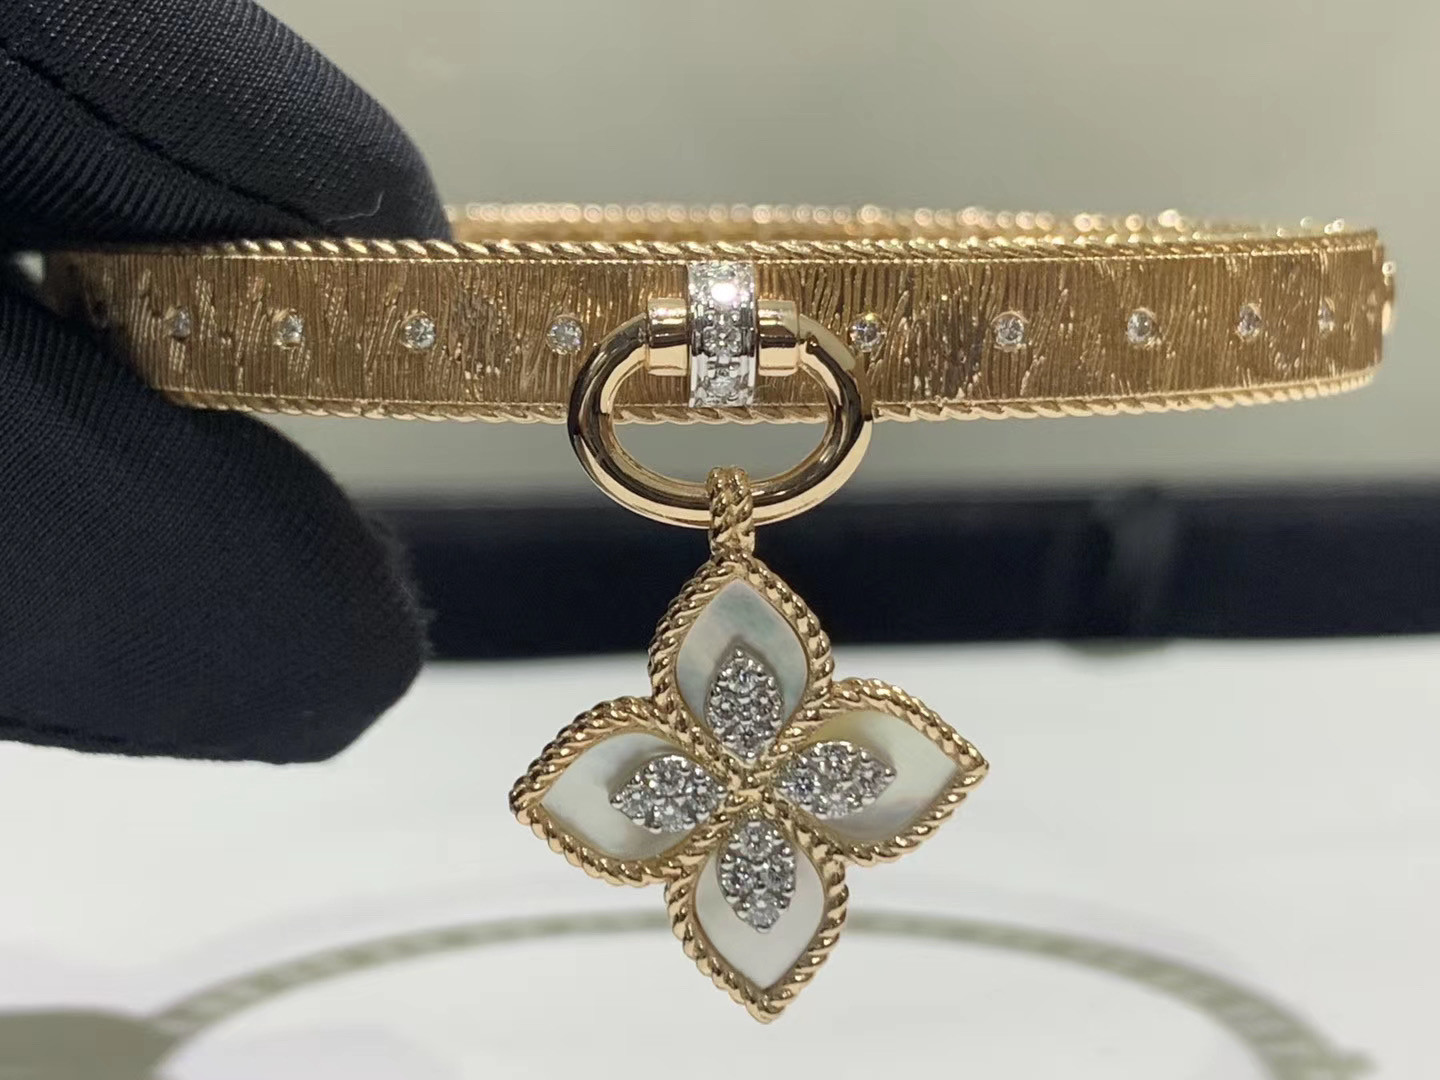  Custom 18k gold jewelry diamonds Bracelet white shell wholesale costume jewellery suppliers Manufactures